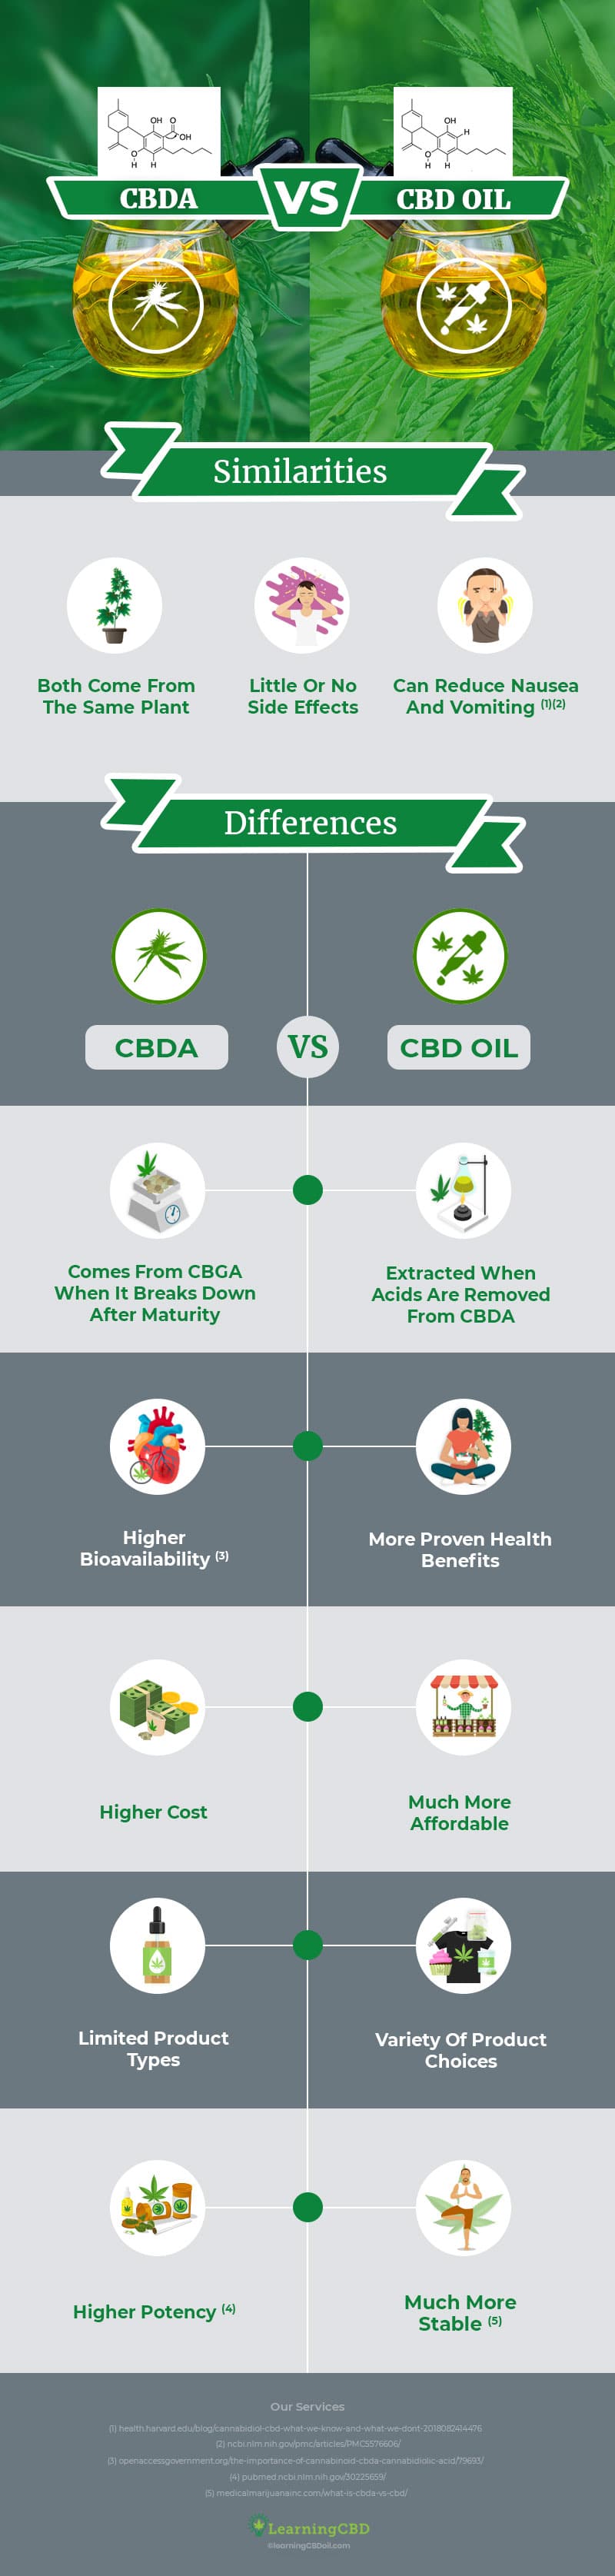 cbda vs cbd oil infographic